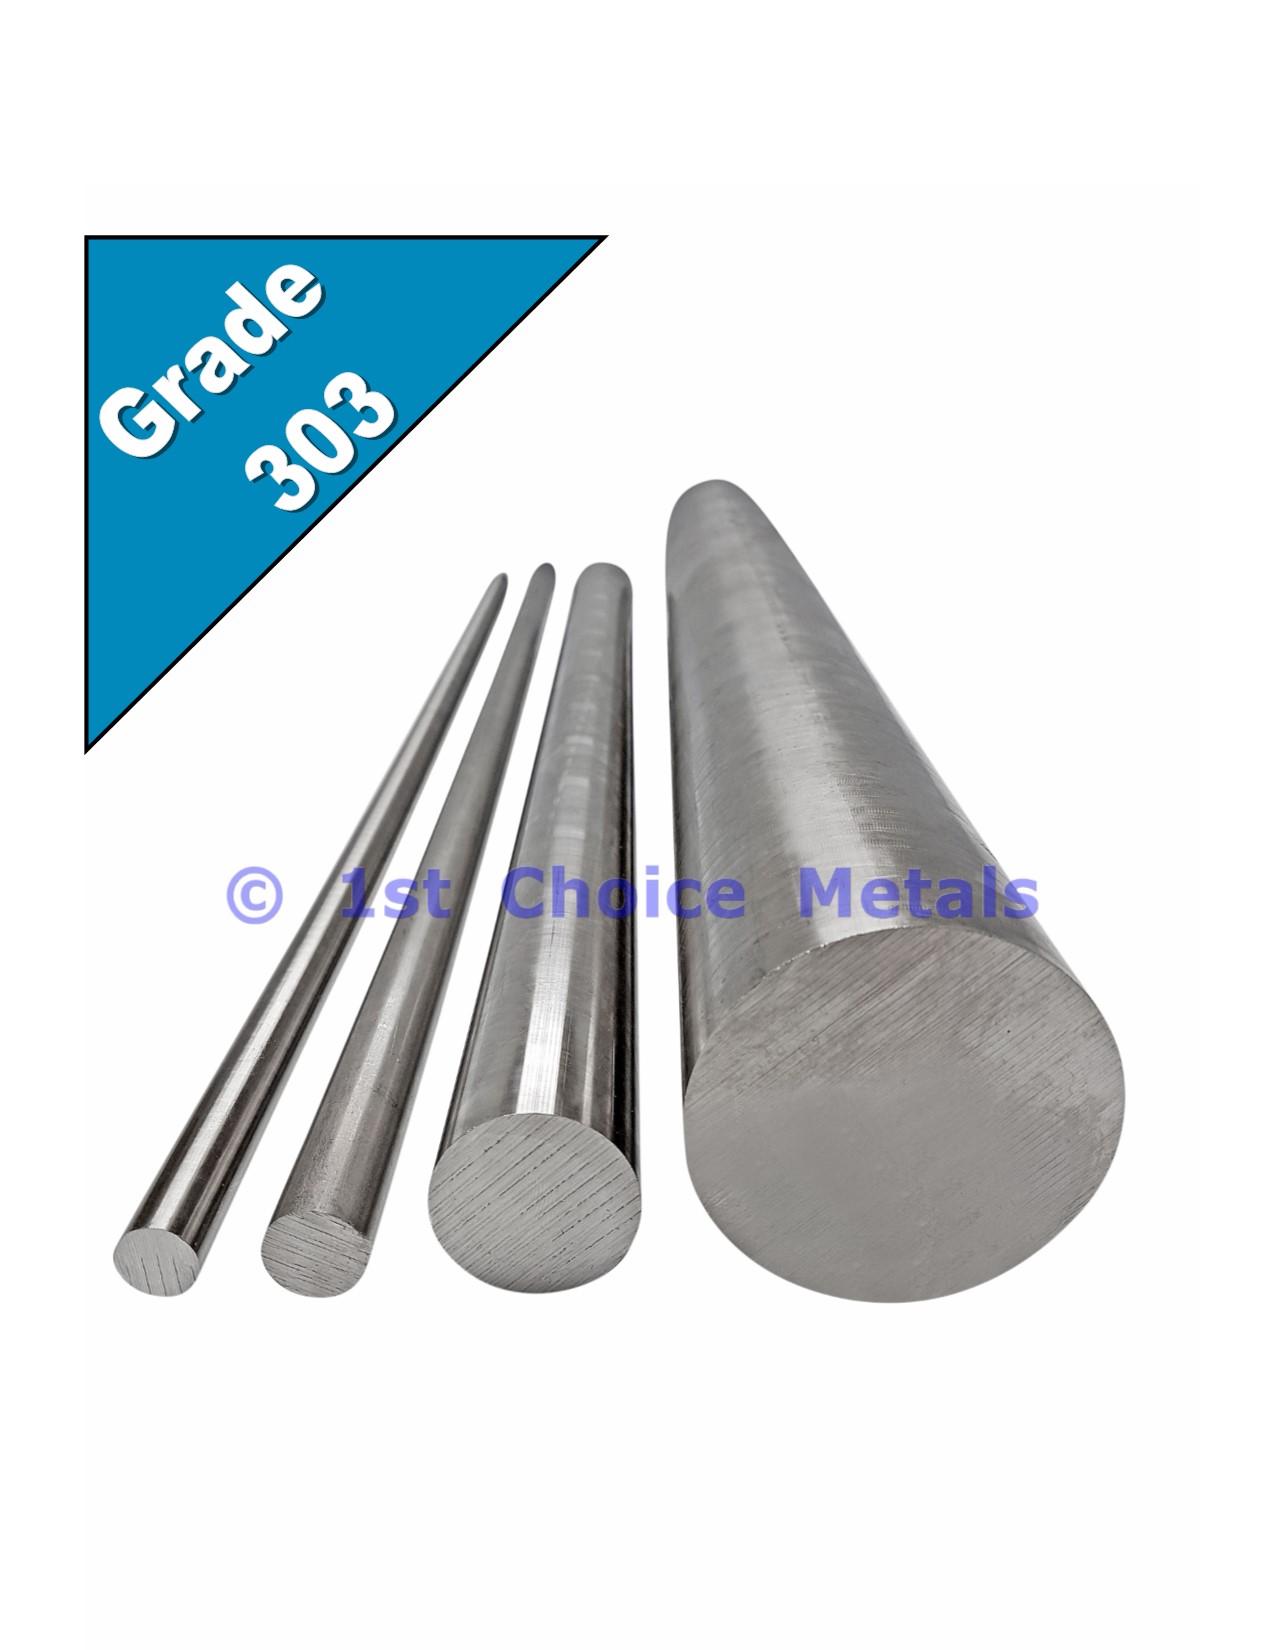 25mm A4 marine grade stainless steel round bar grade 316 choisir une longueur 